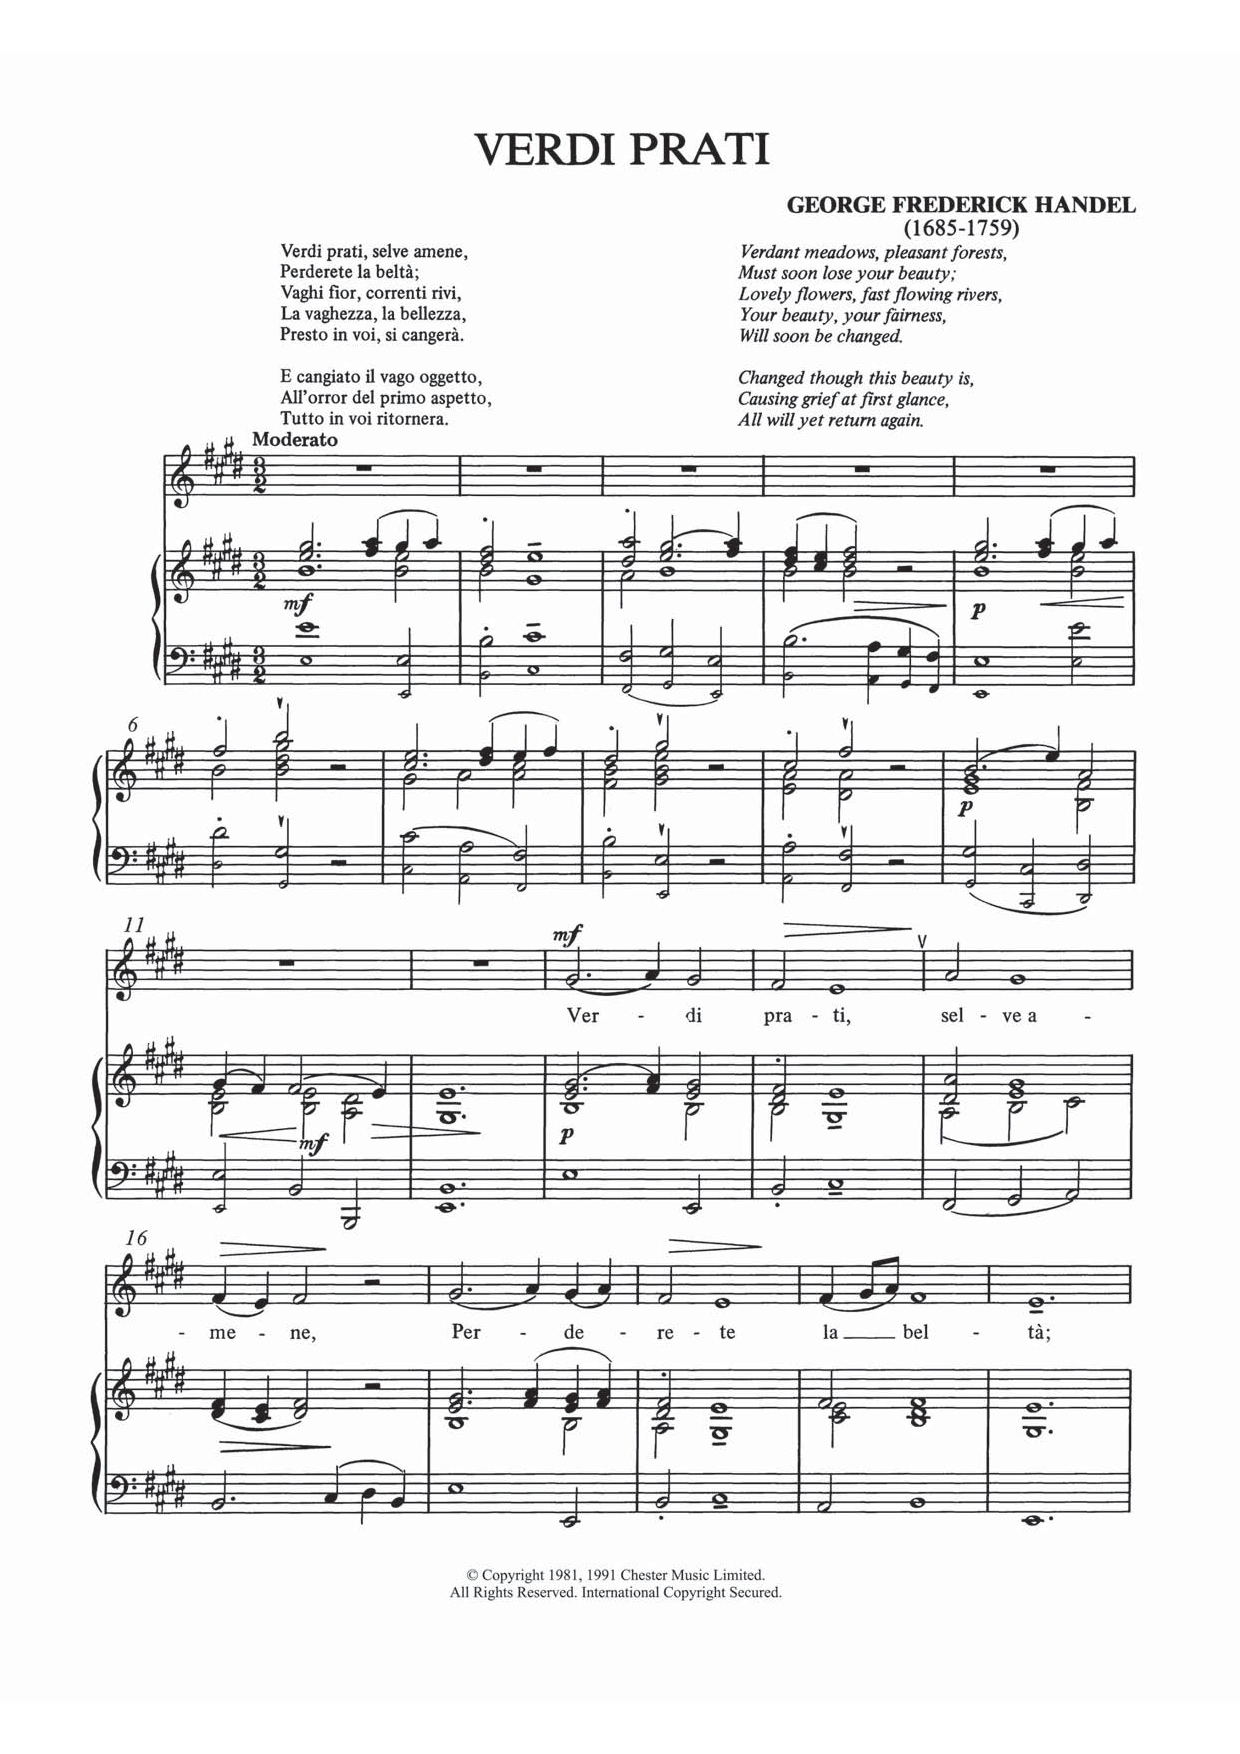 George Frideric Handel Verdi Prati Sheet Music Notes & Chords for Piano & Vocal - Download or Print PDF